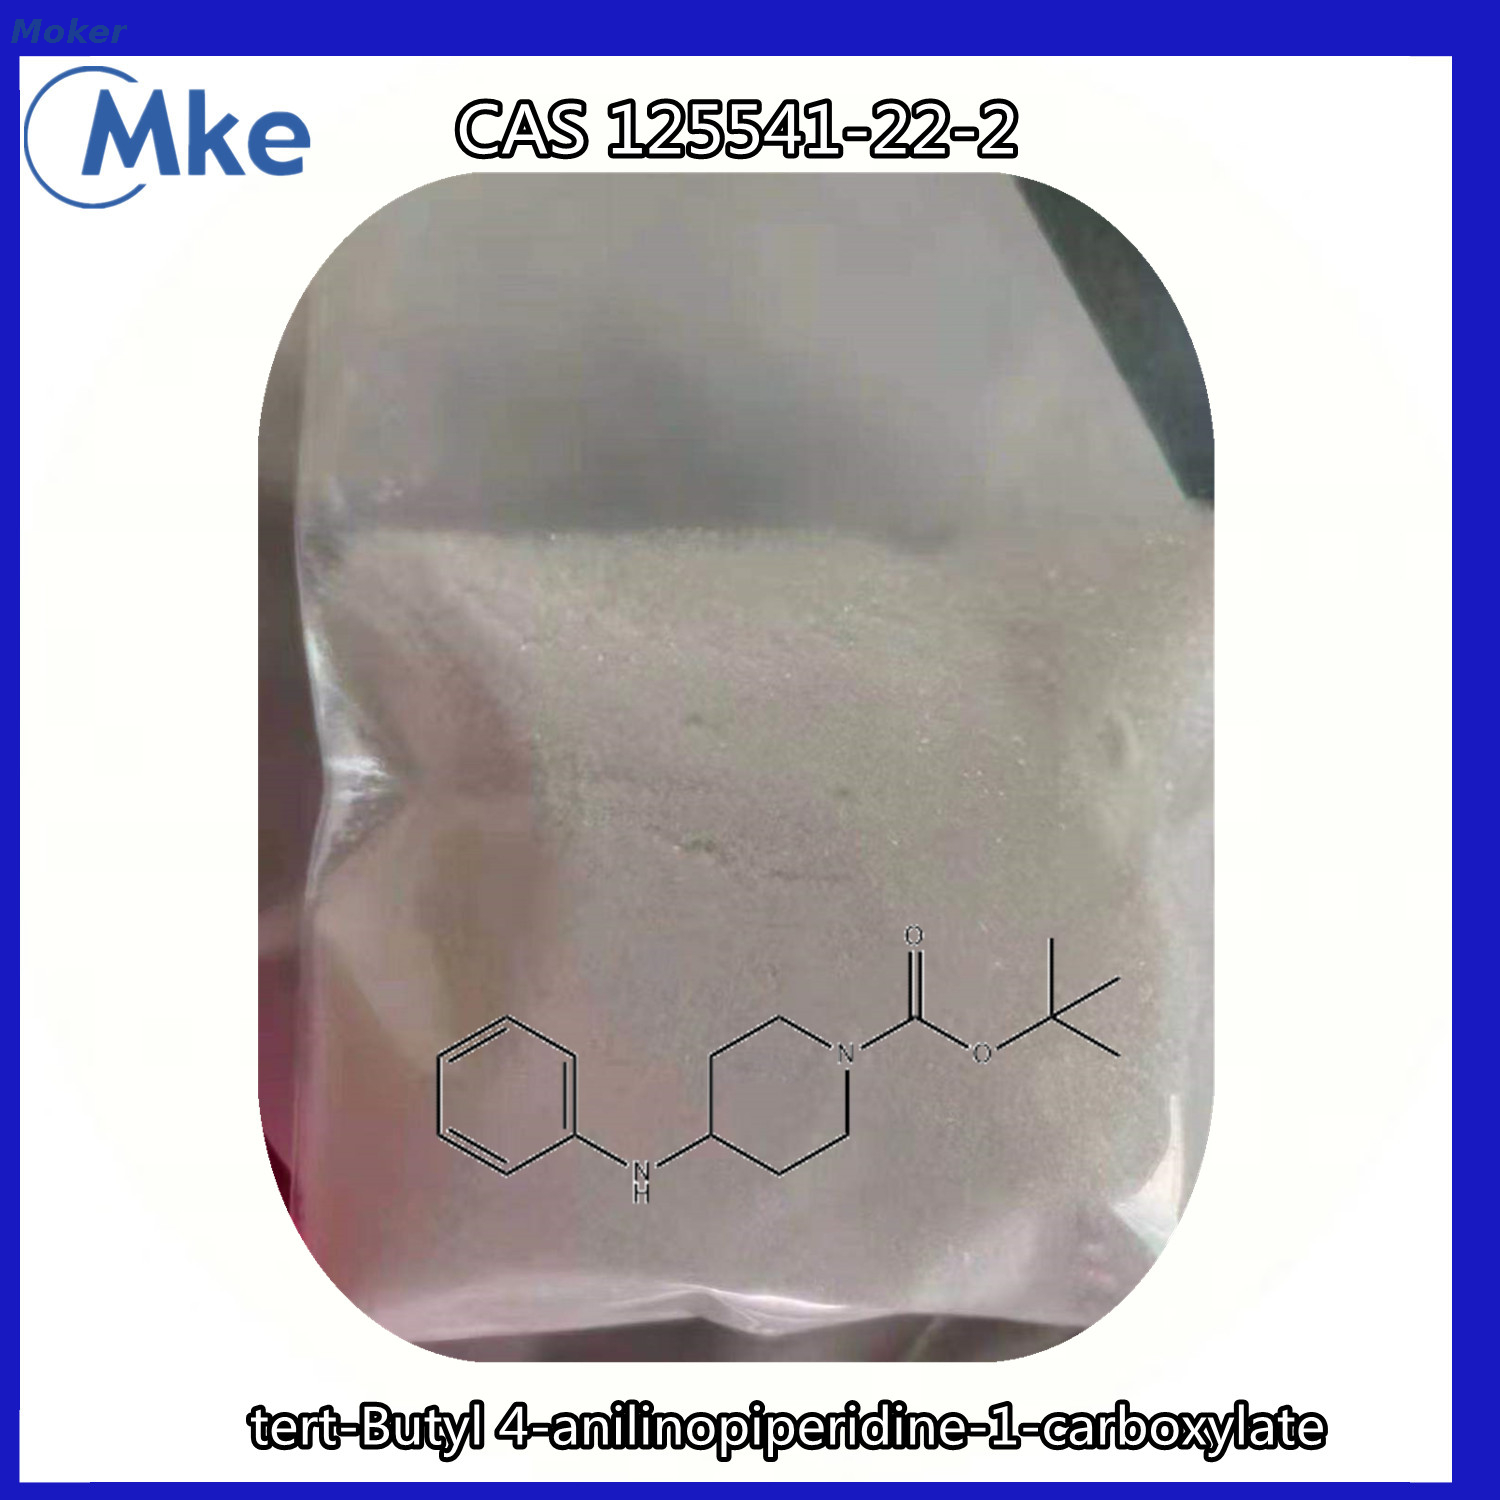 FABRIK PIRCE CAS 125541-22-2 Piperidon-tert-Butyl-4-anilinopiperidin-1-carboxylat, weißes Pulver